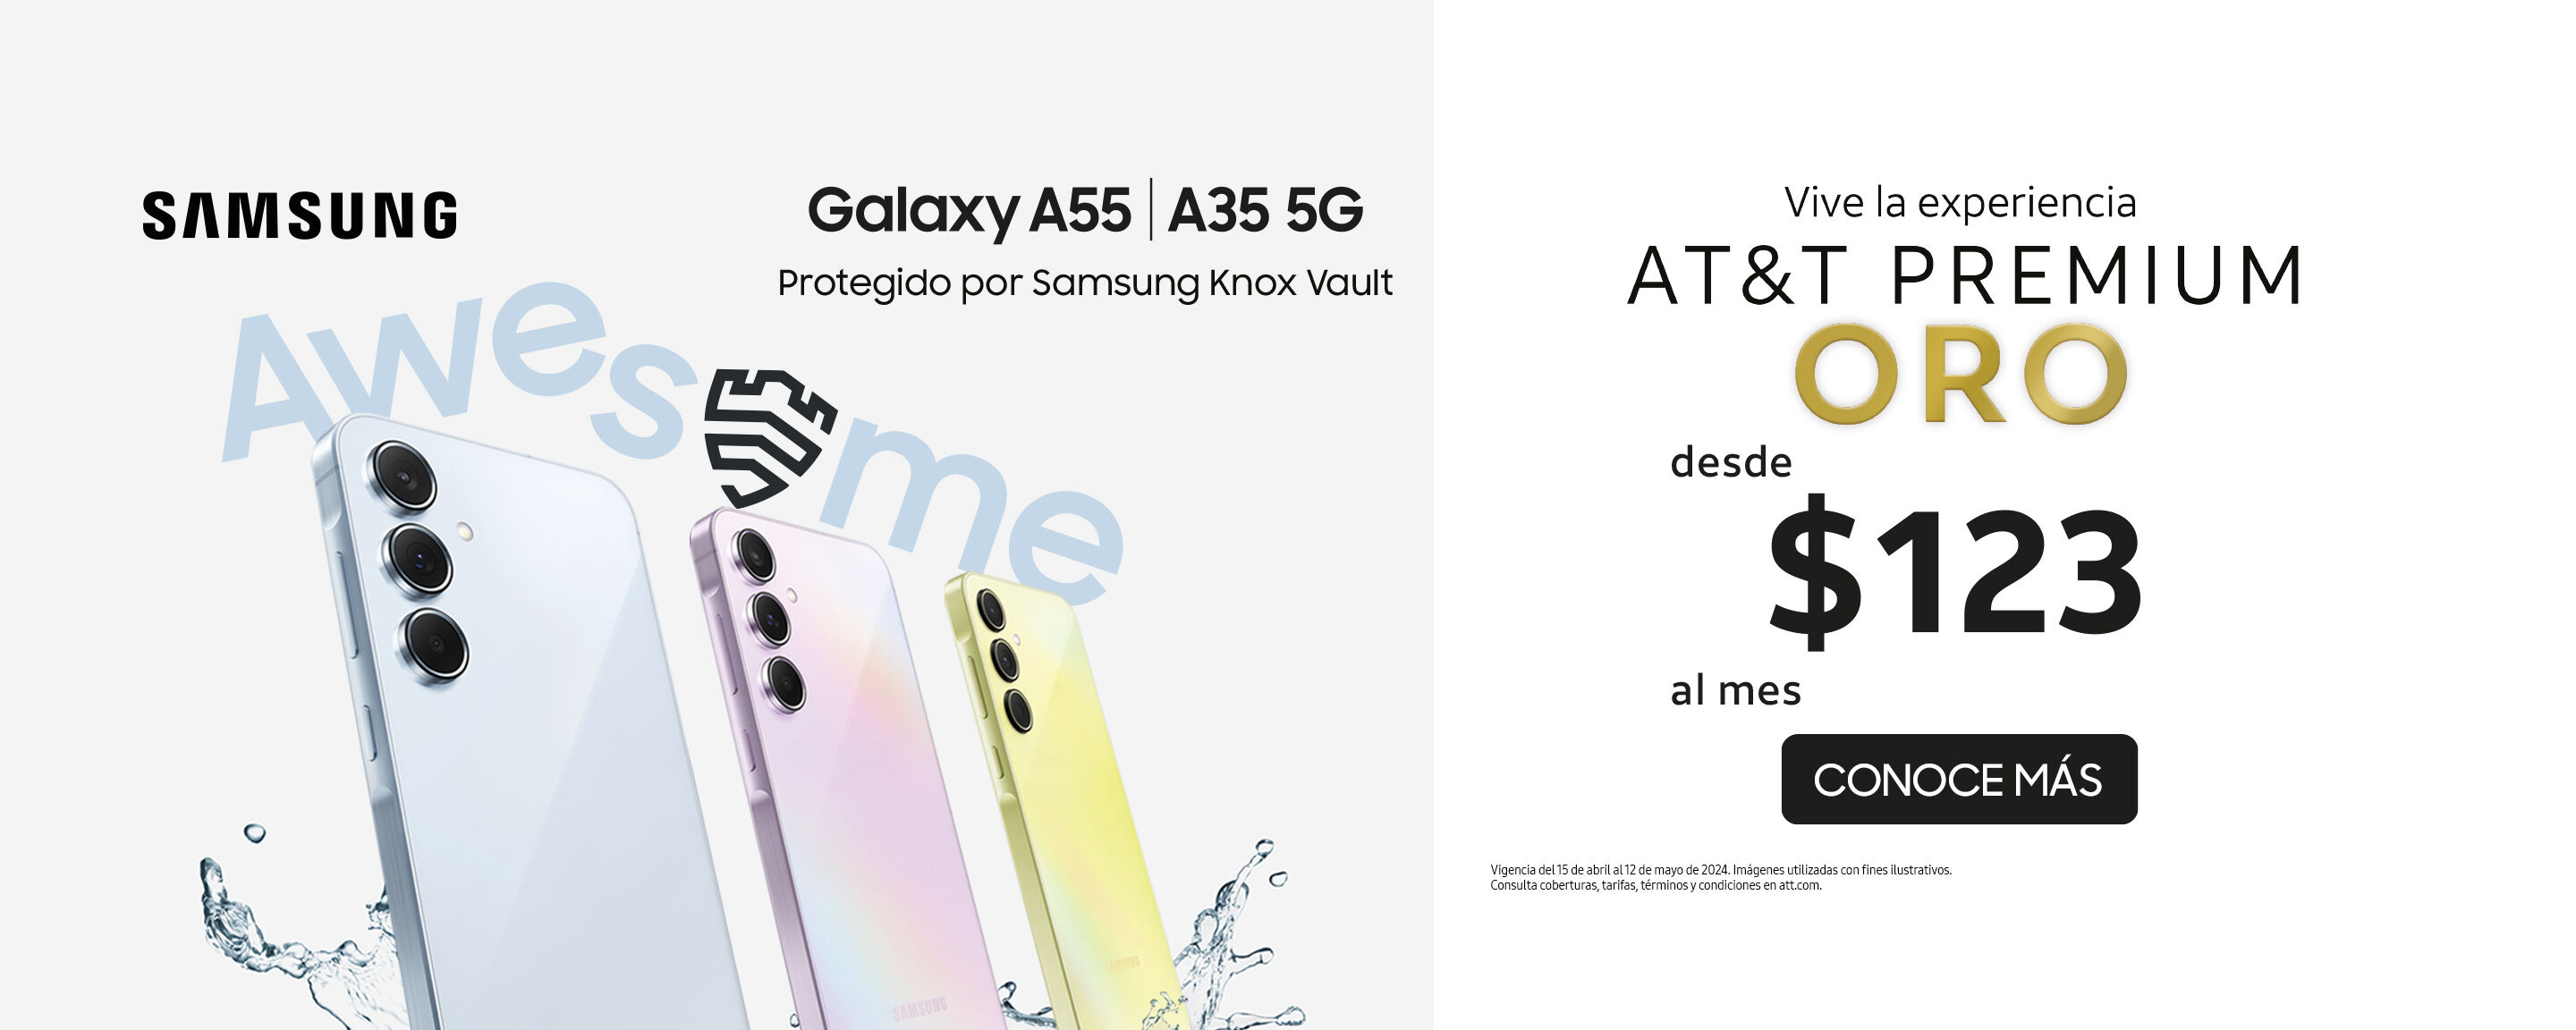 SAMSUNG Galaxy A55 | A35 5G, desde $123 al mes